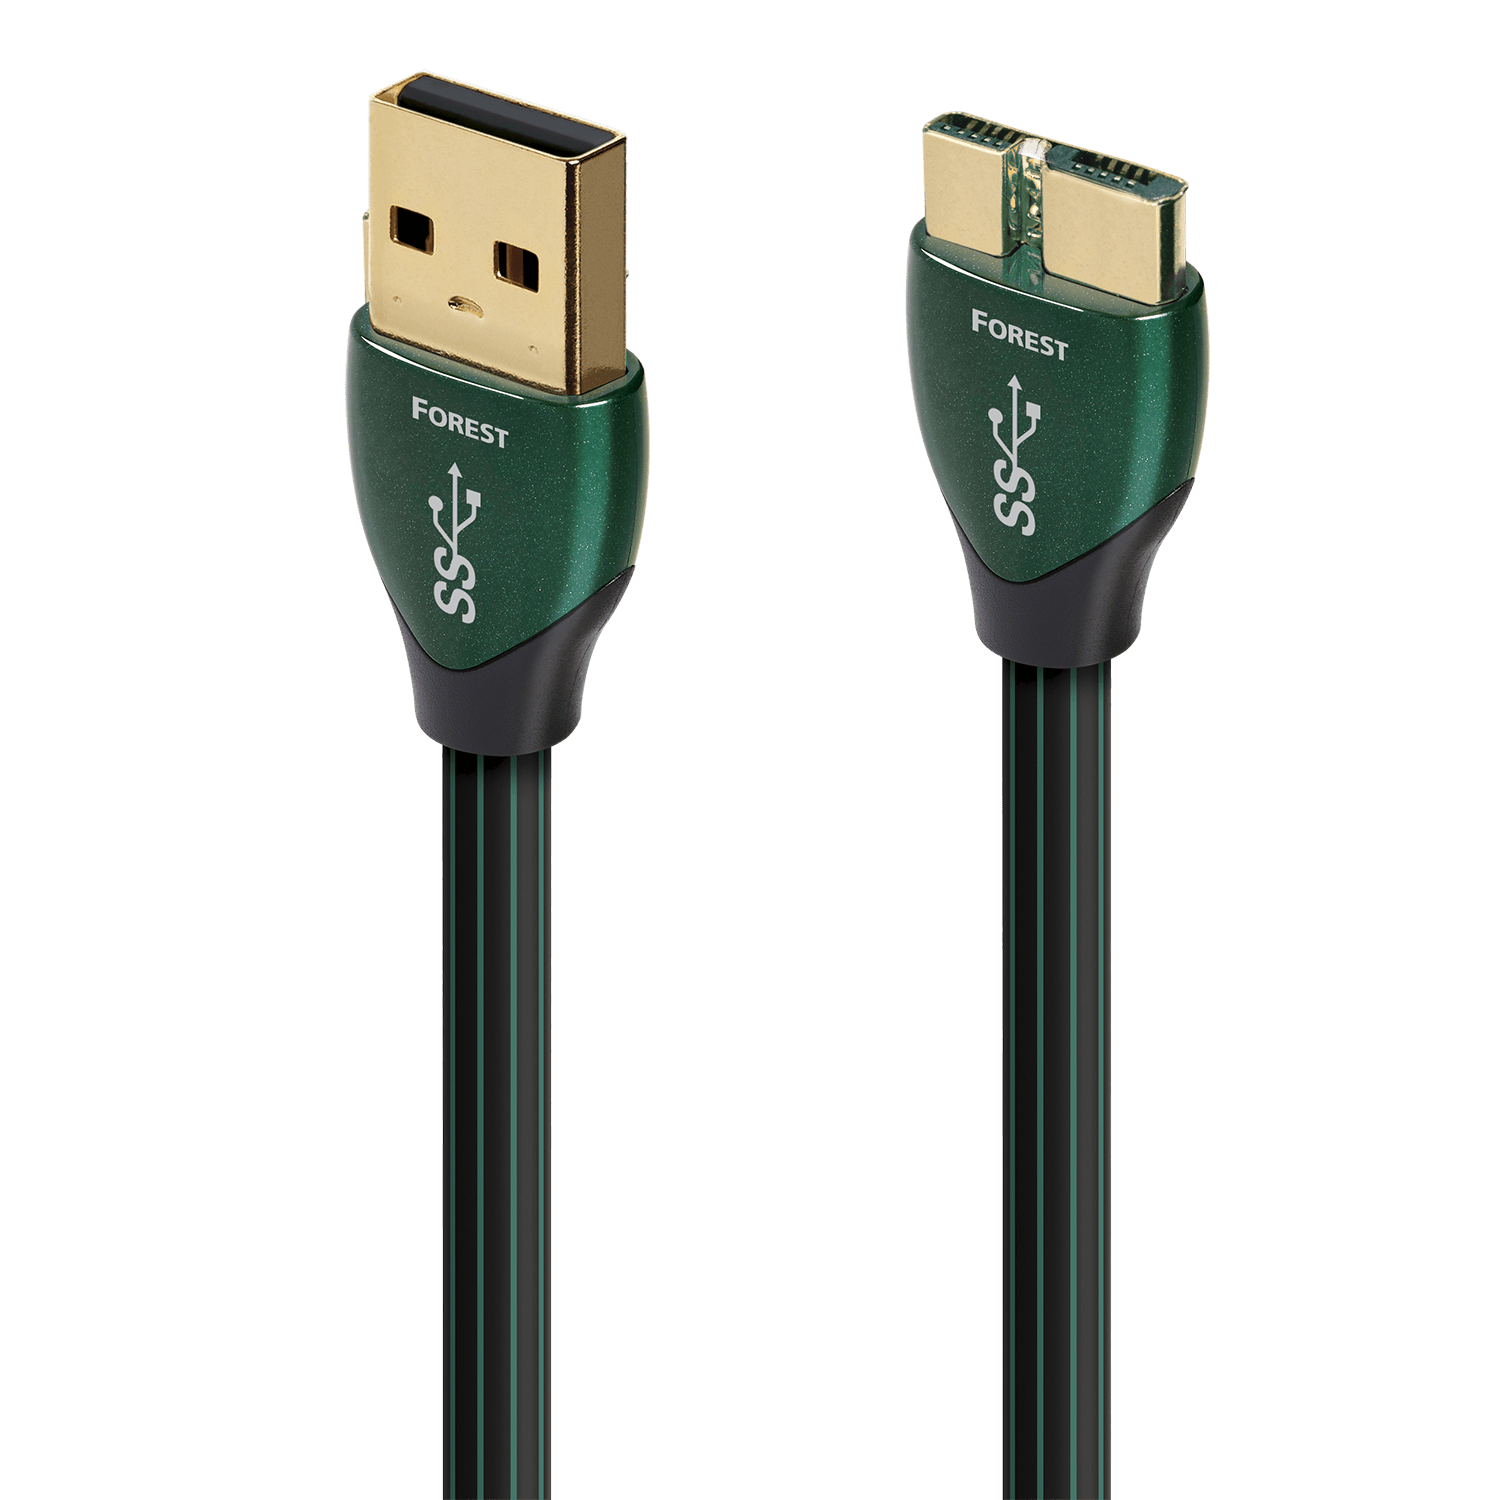 AudioQuest Cinnamon USB-A 3.0 > Micro B 3.0 High-Definition 